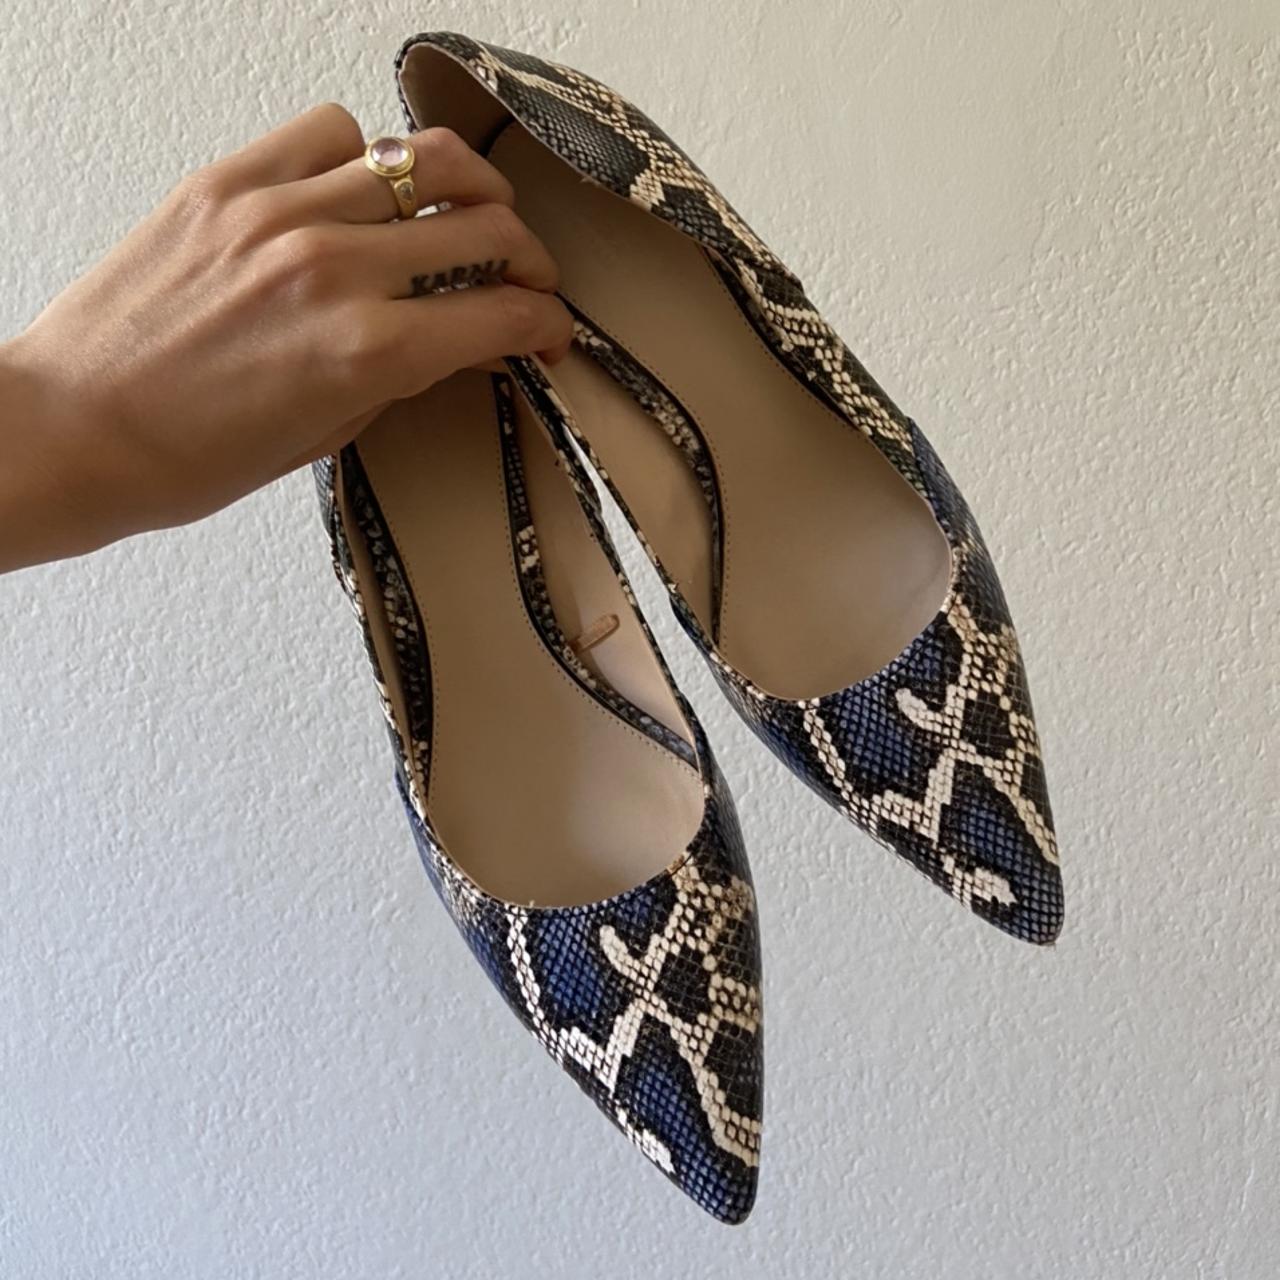 Product Image 2 - Zara kitten heels! Blue snakeskin